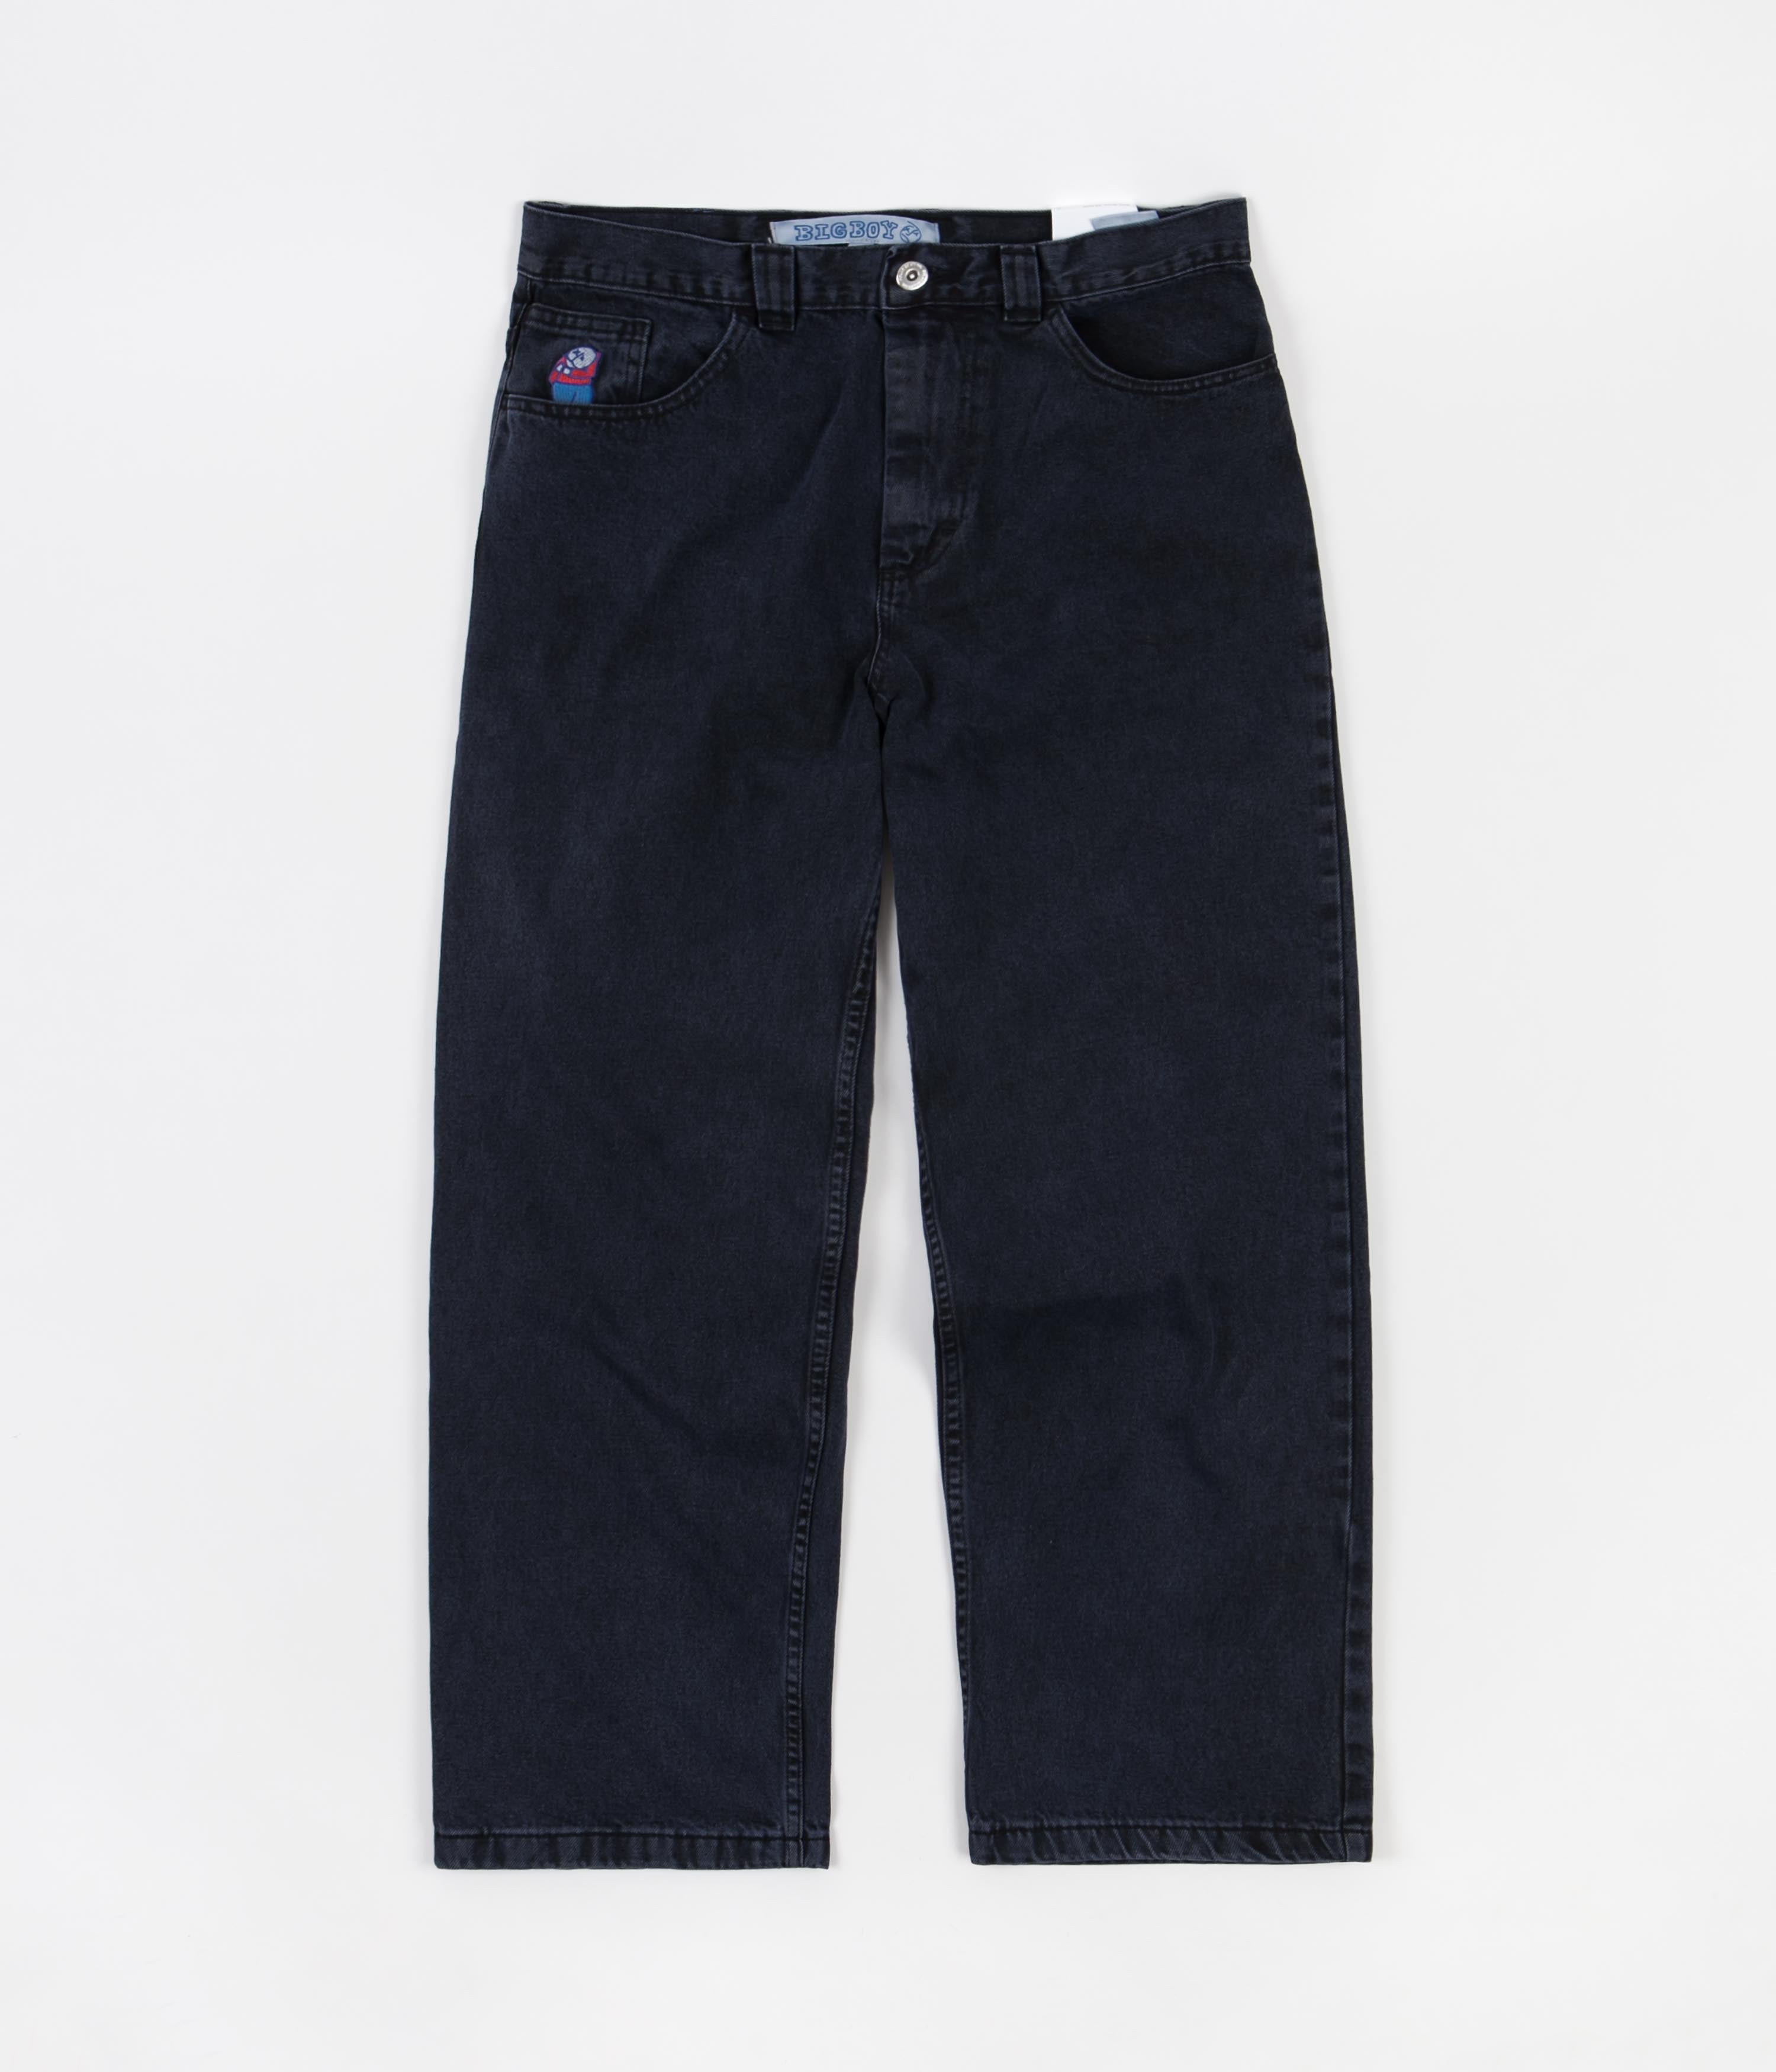 Polar Big Boy Jeans - WpadcShops - Blue Black | Accentuate those